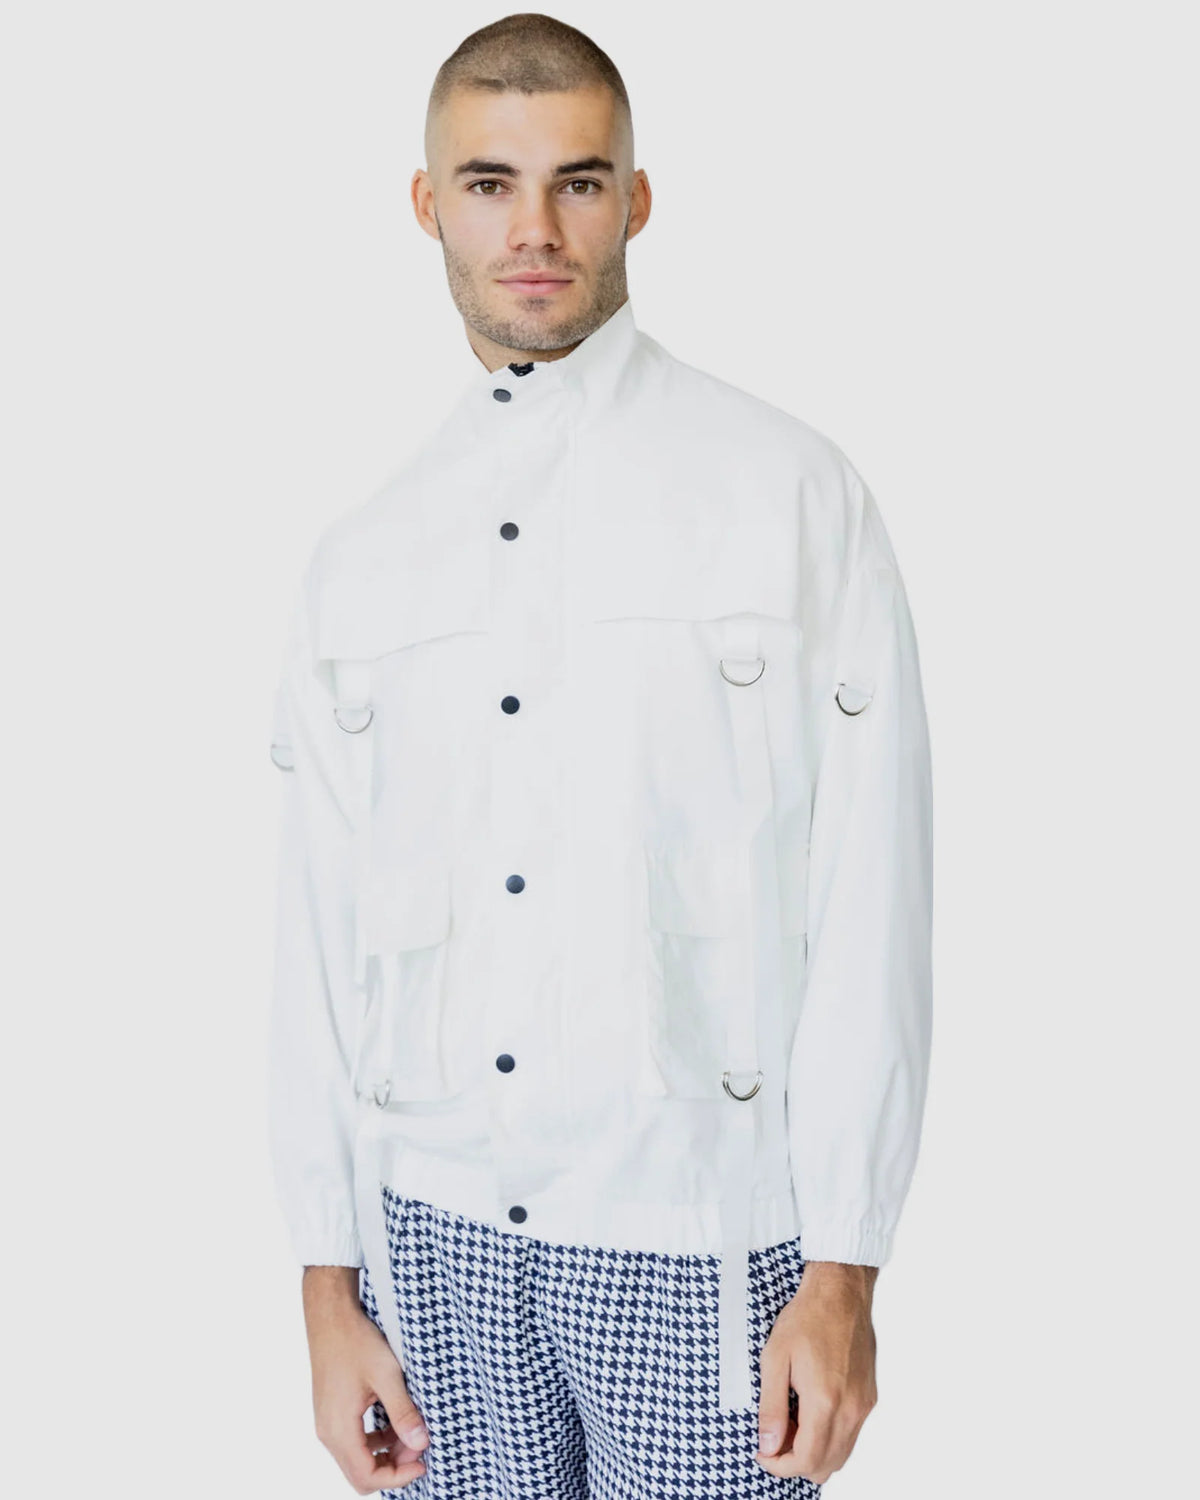 Justin Cassin Haruto Strap Jacket in White Color